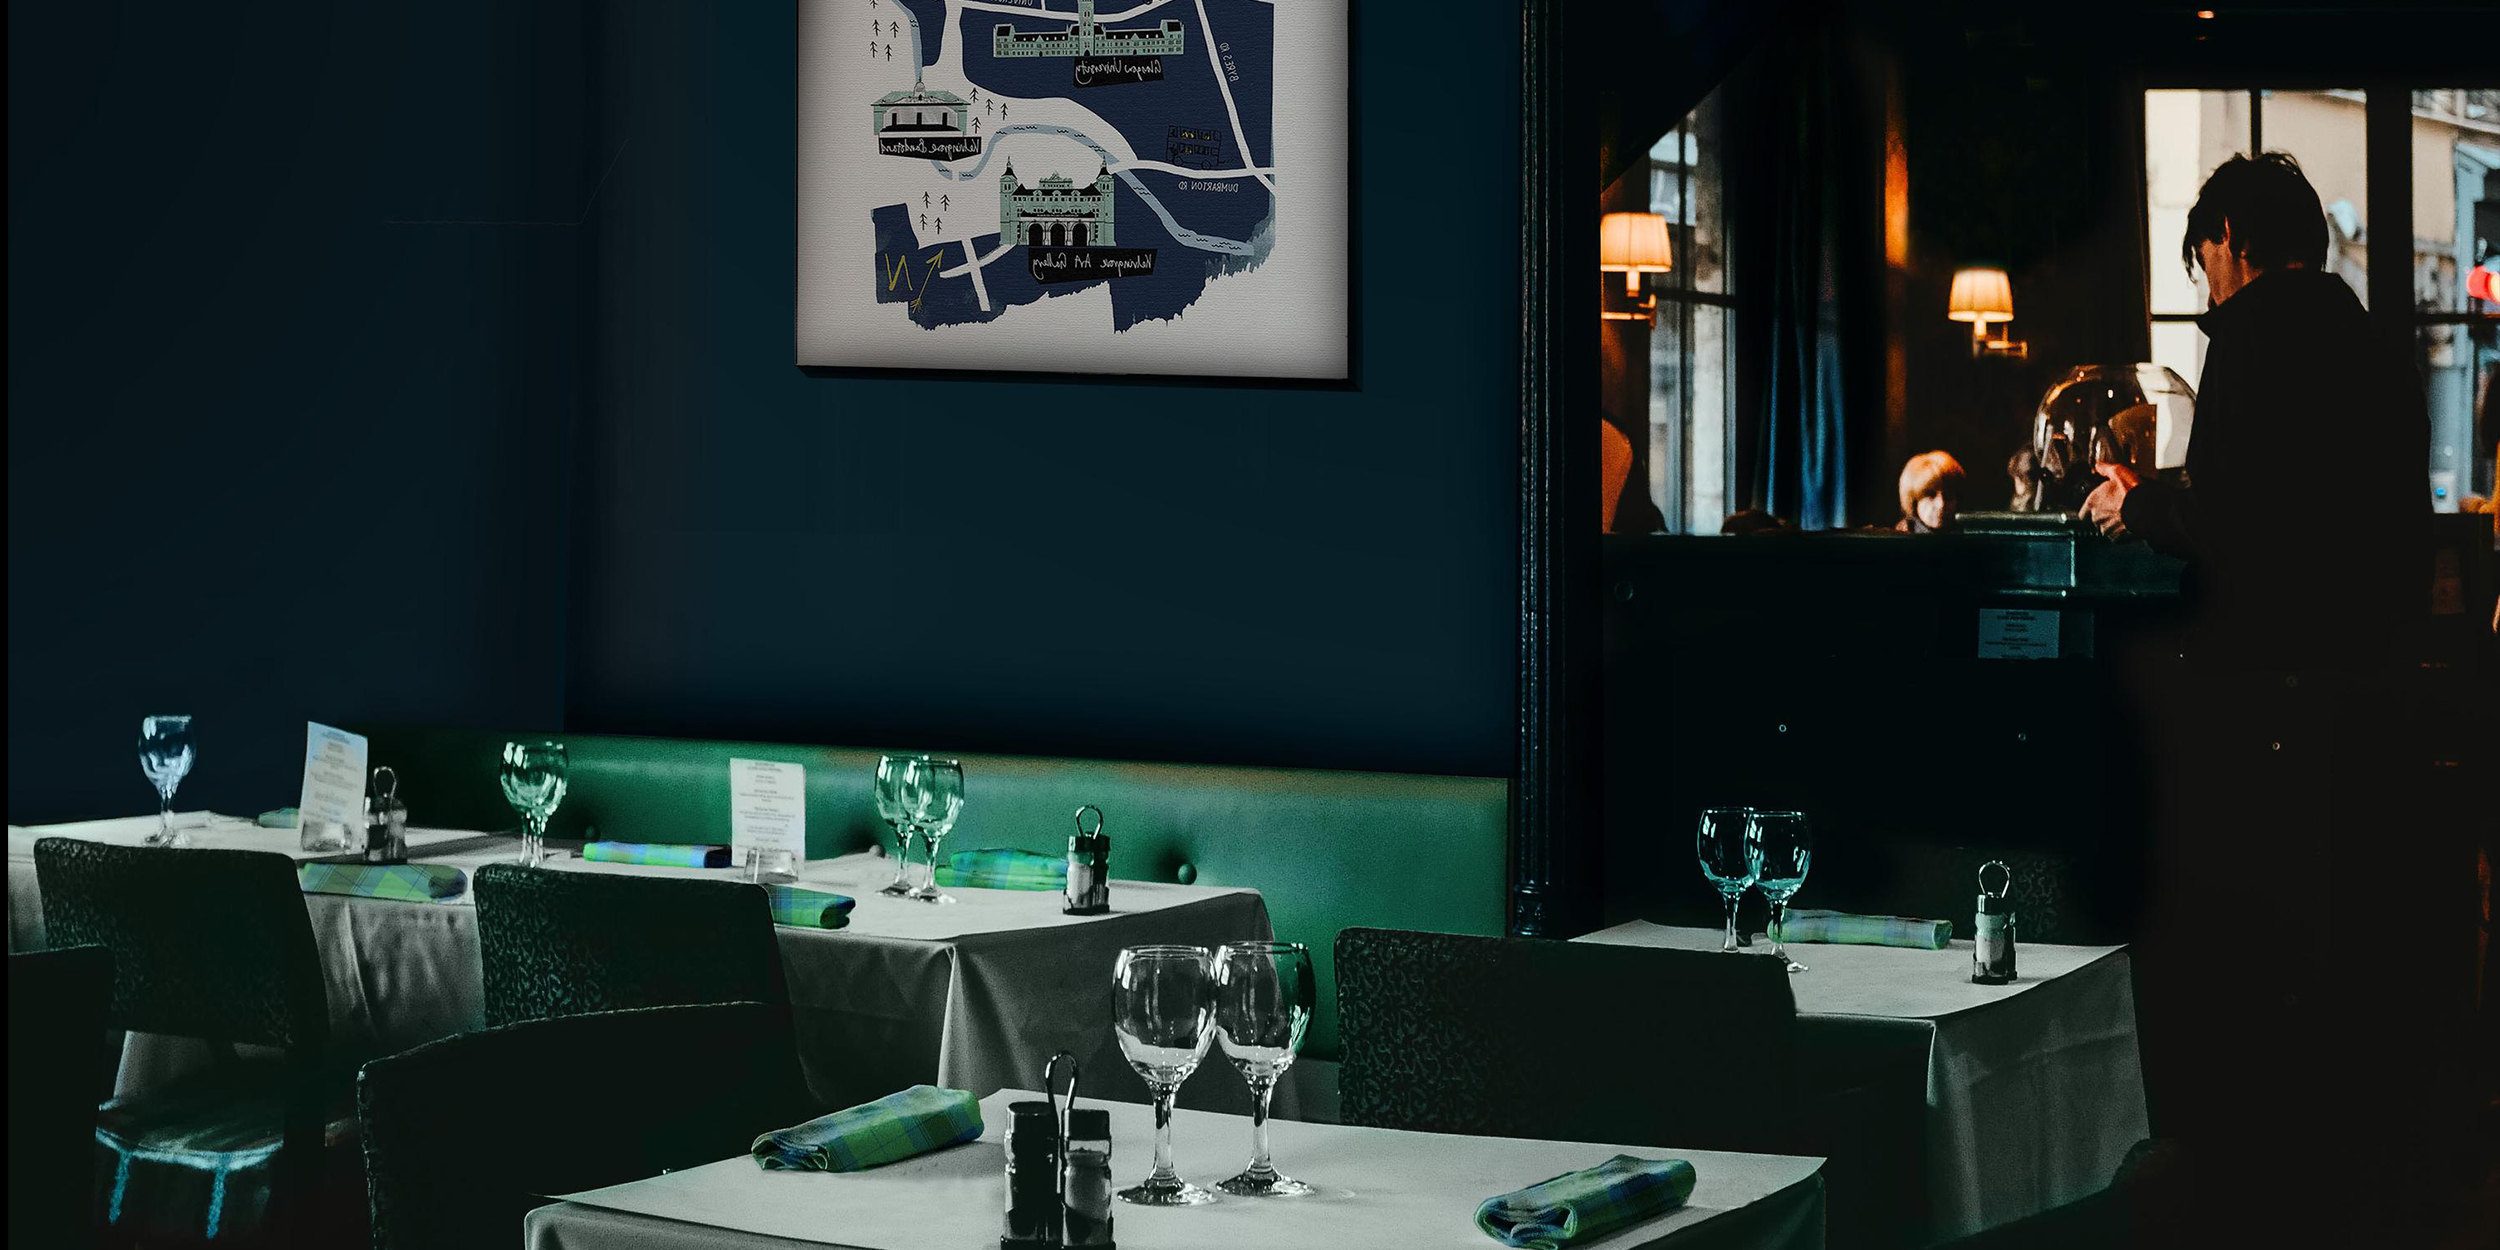 Restaurant scene featuring tartan napkins and upside down artwork.